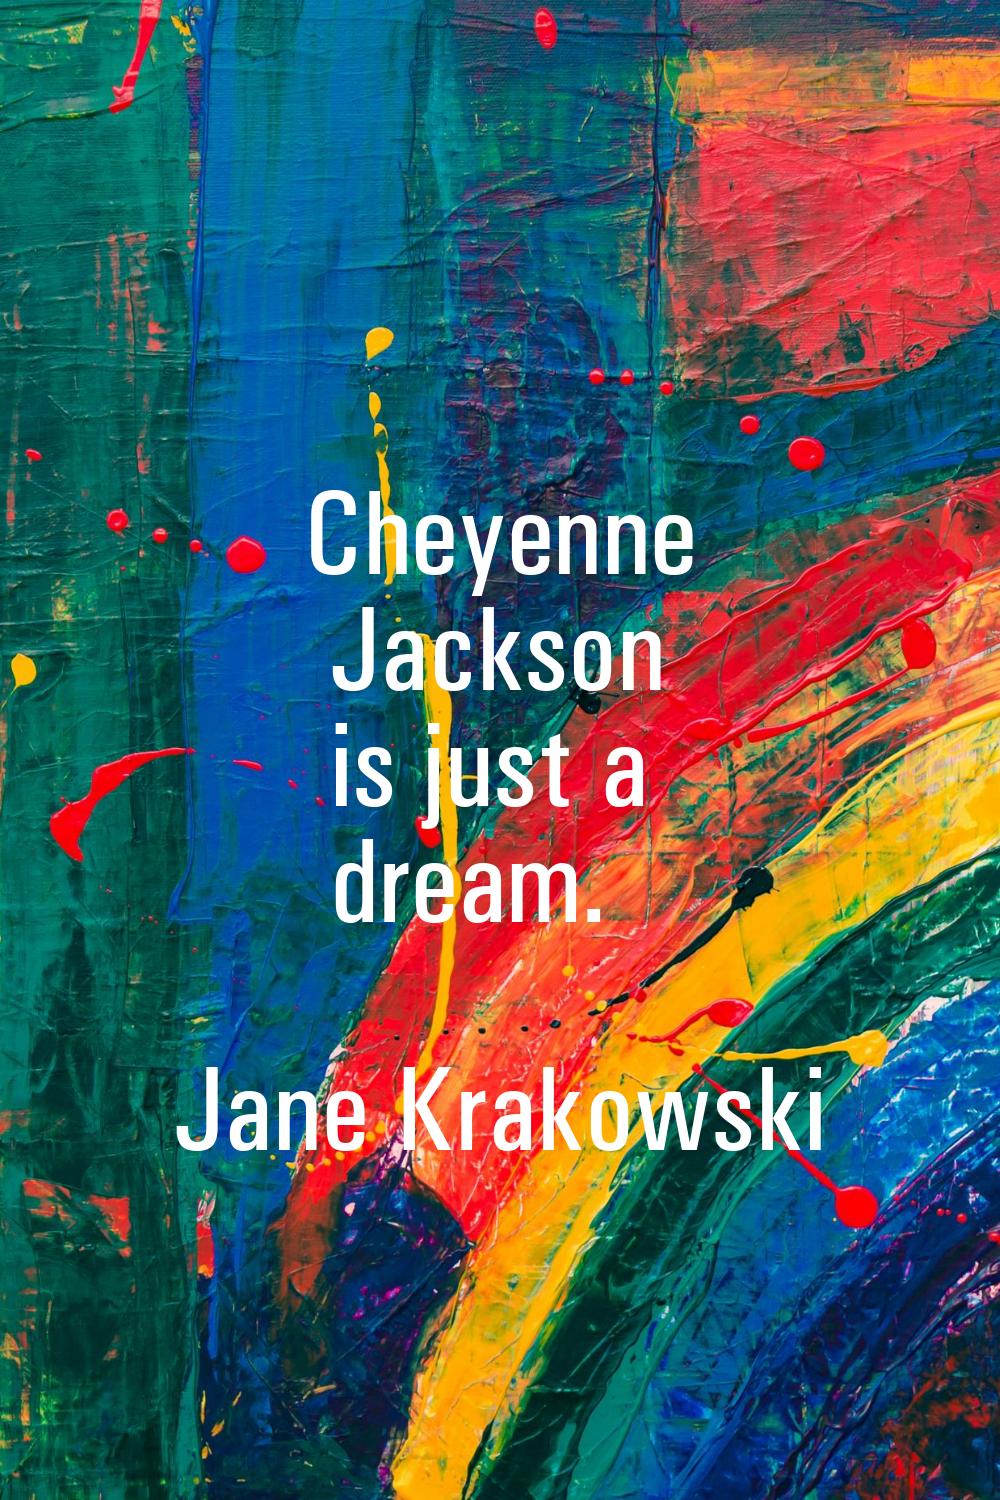 Cheyenne Jackson is just a dream.